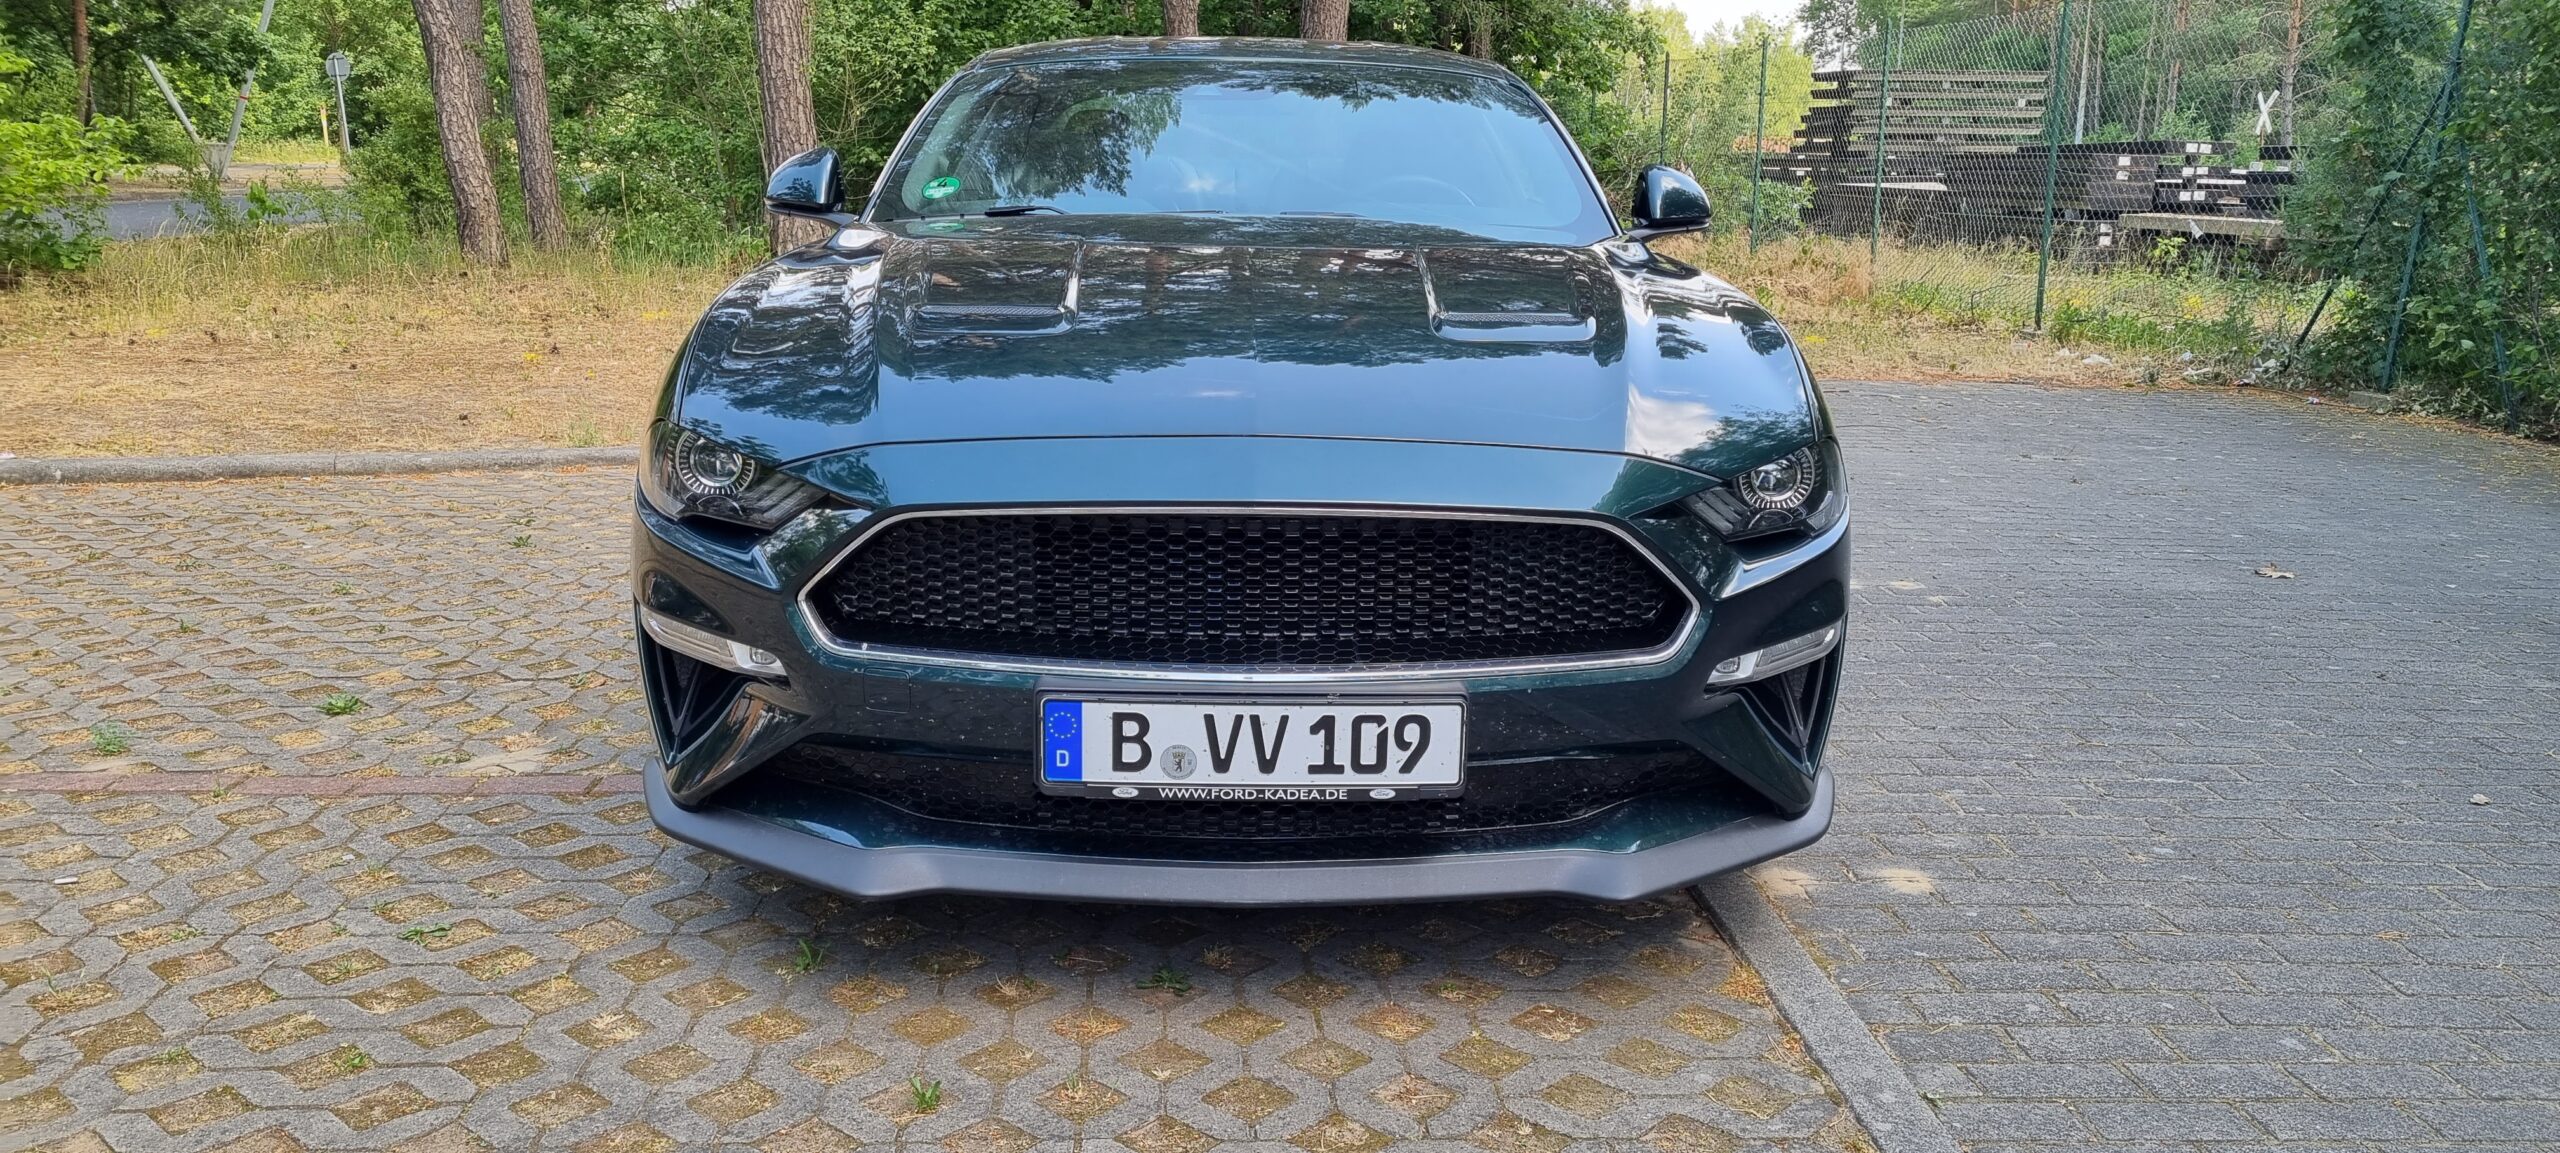 Green 2019 Ford Mustang Bullitt Front